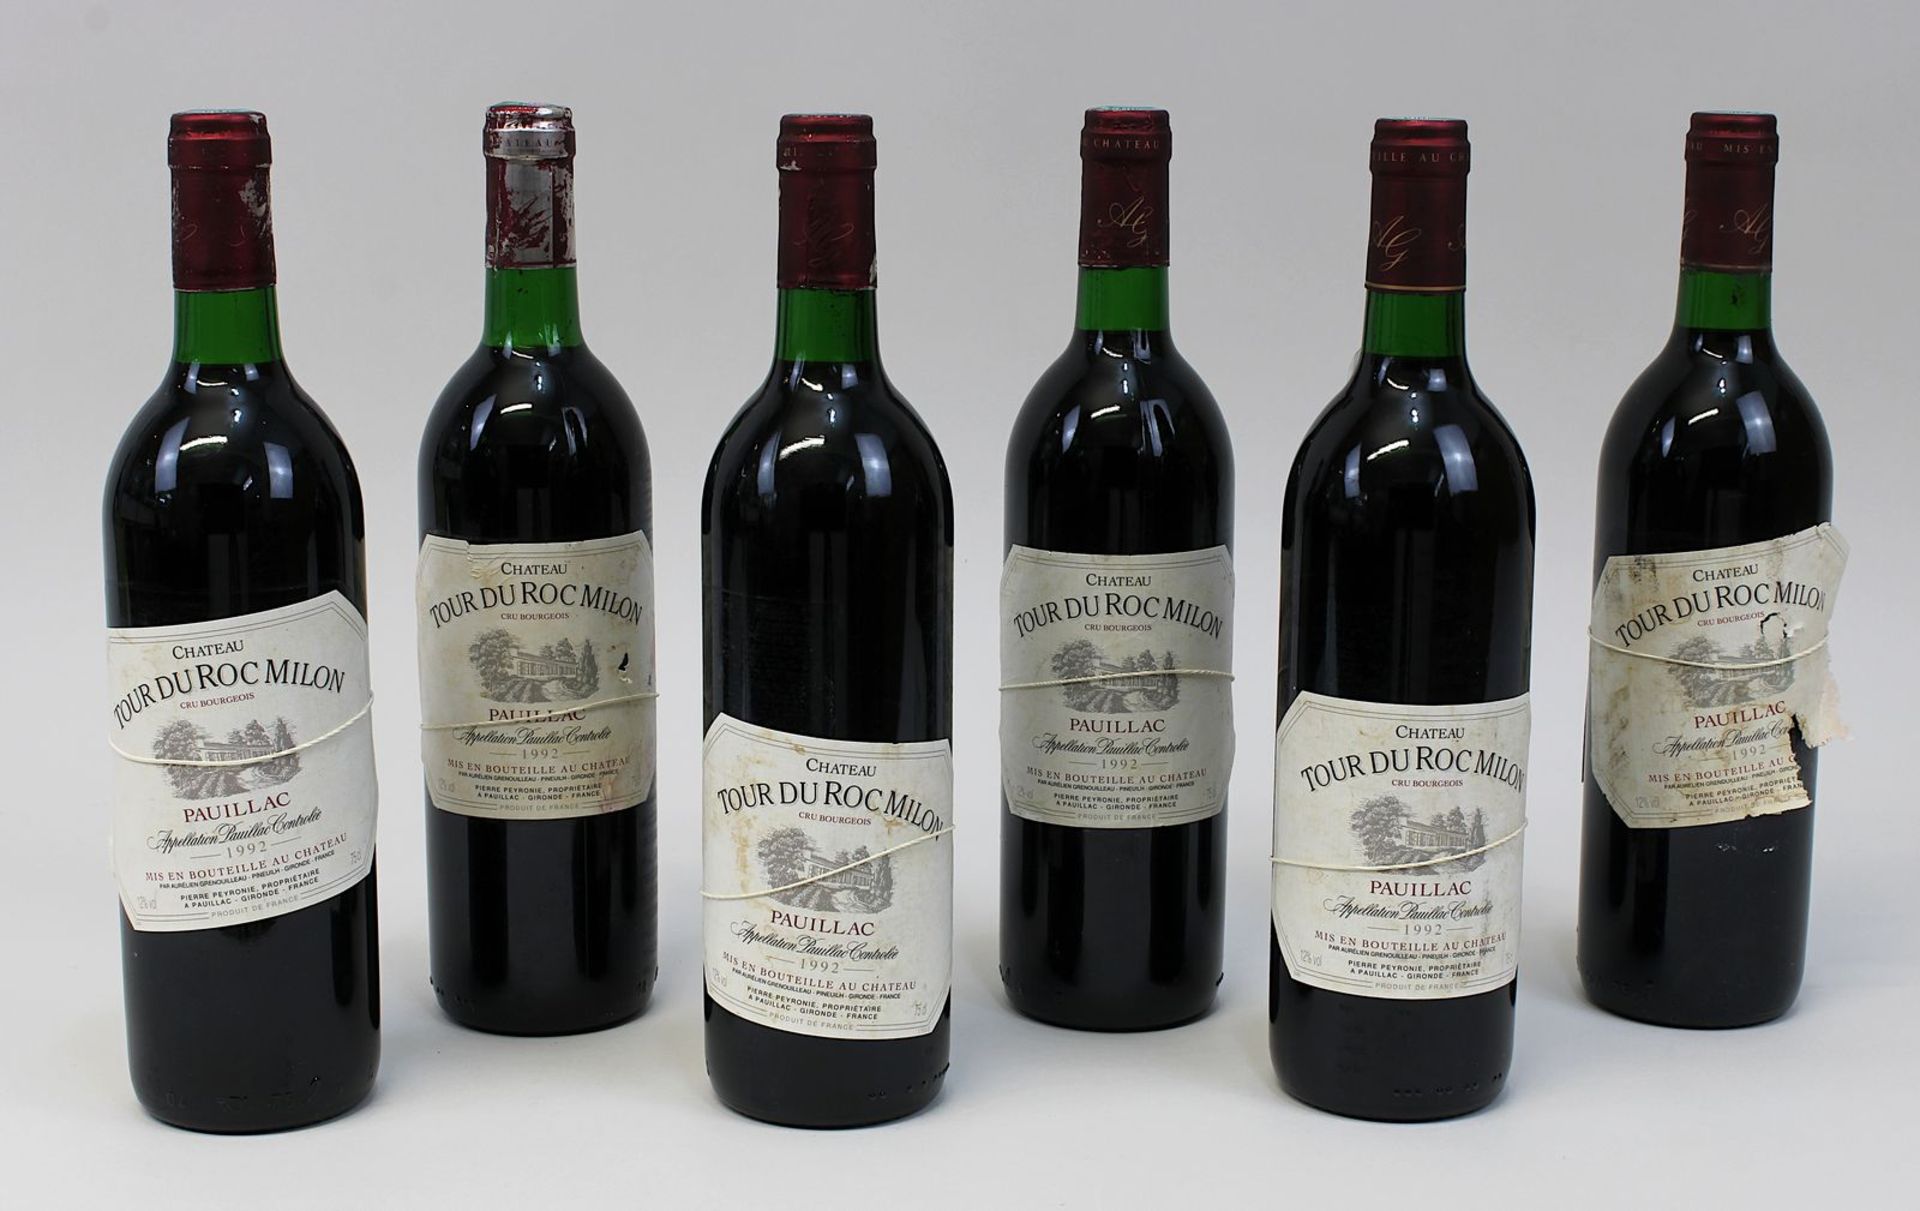 Sechs Flaschen 1992er Chateau Tour du Roc Milon, Cru Bourgeois, Pauillac, Gironde, jeweils gute